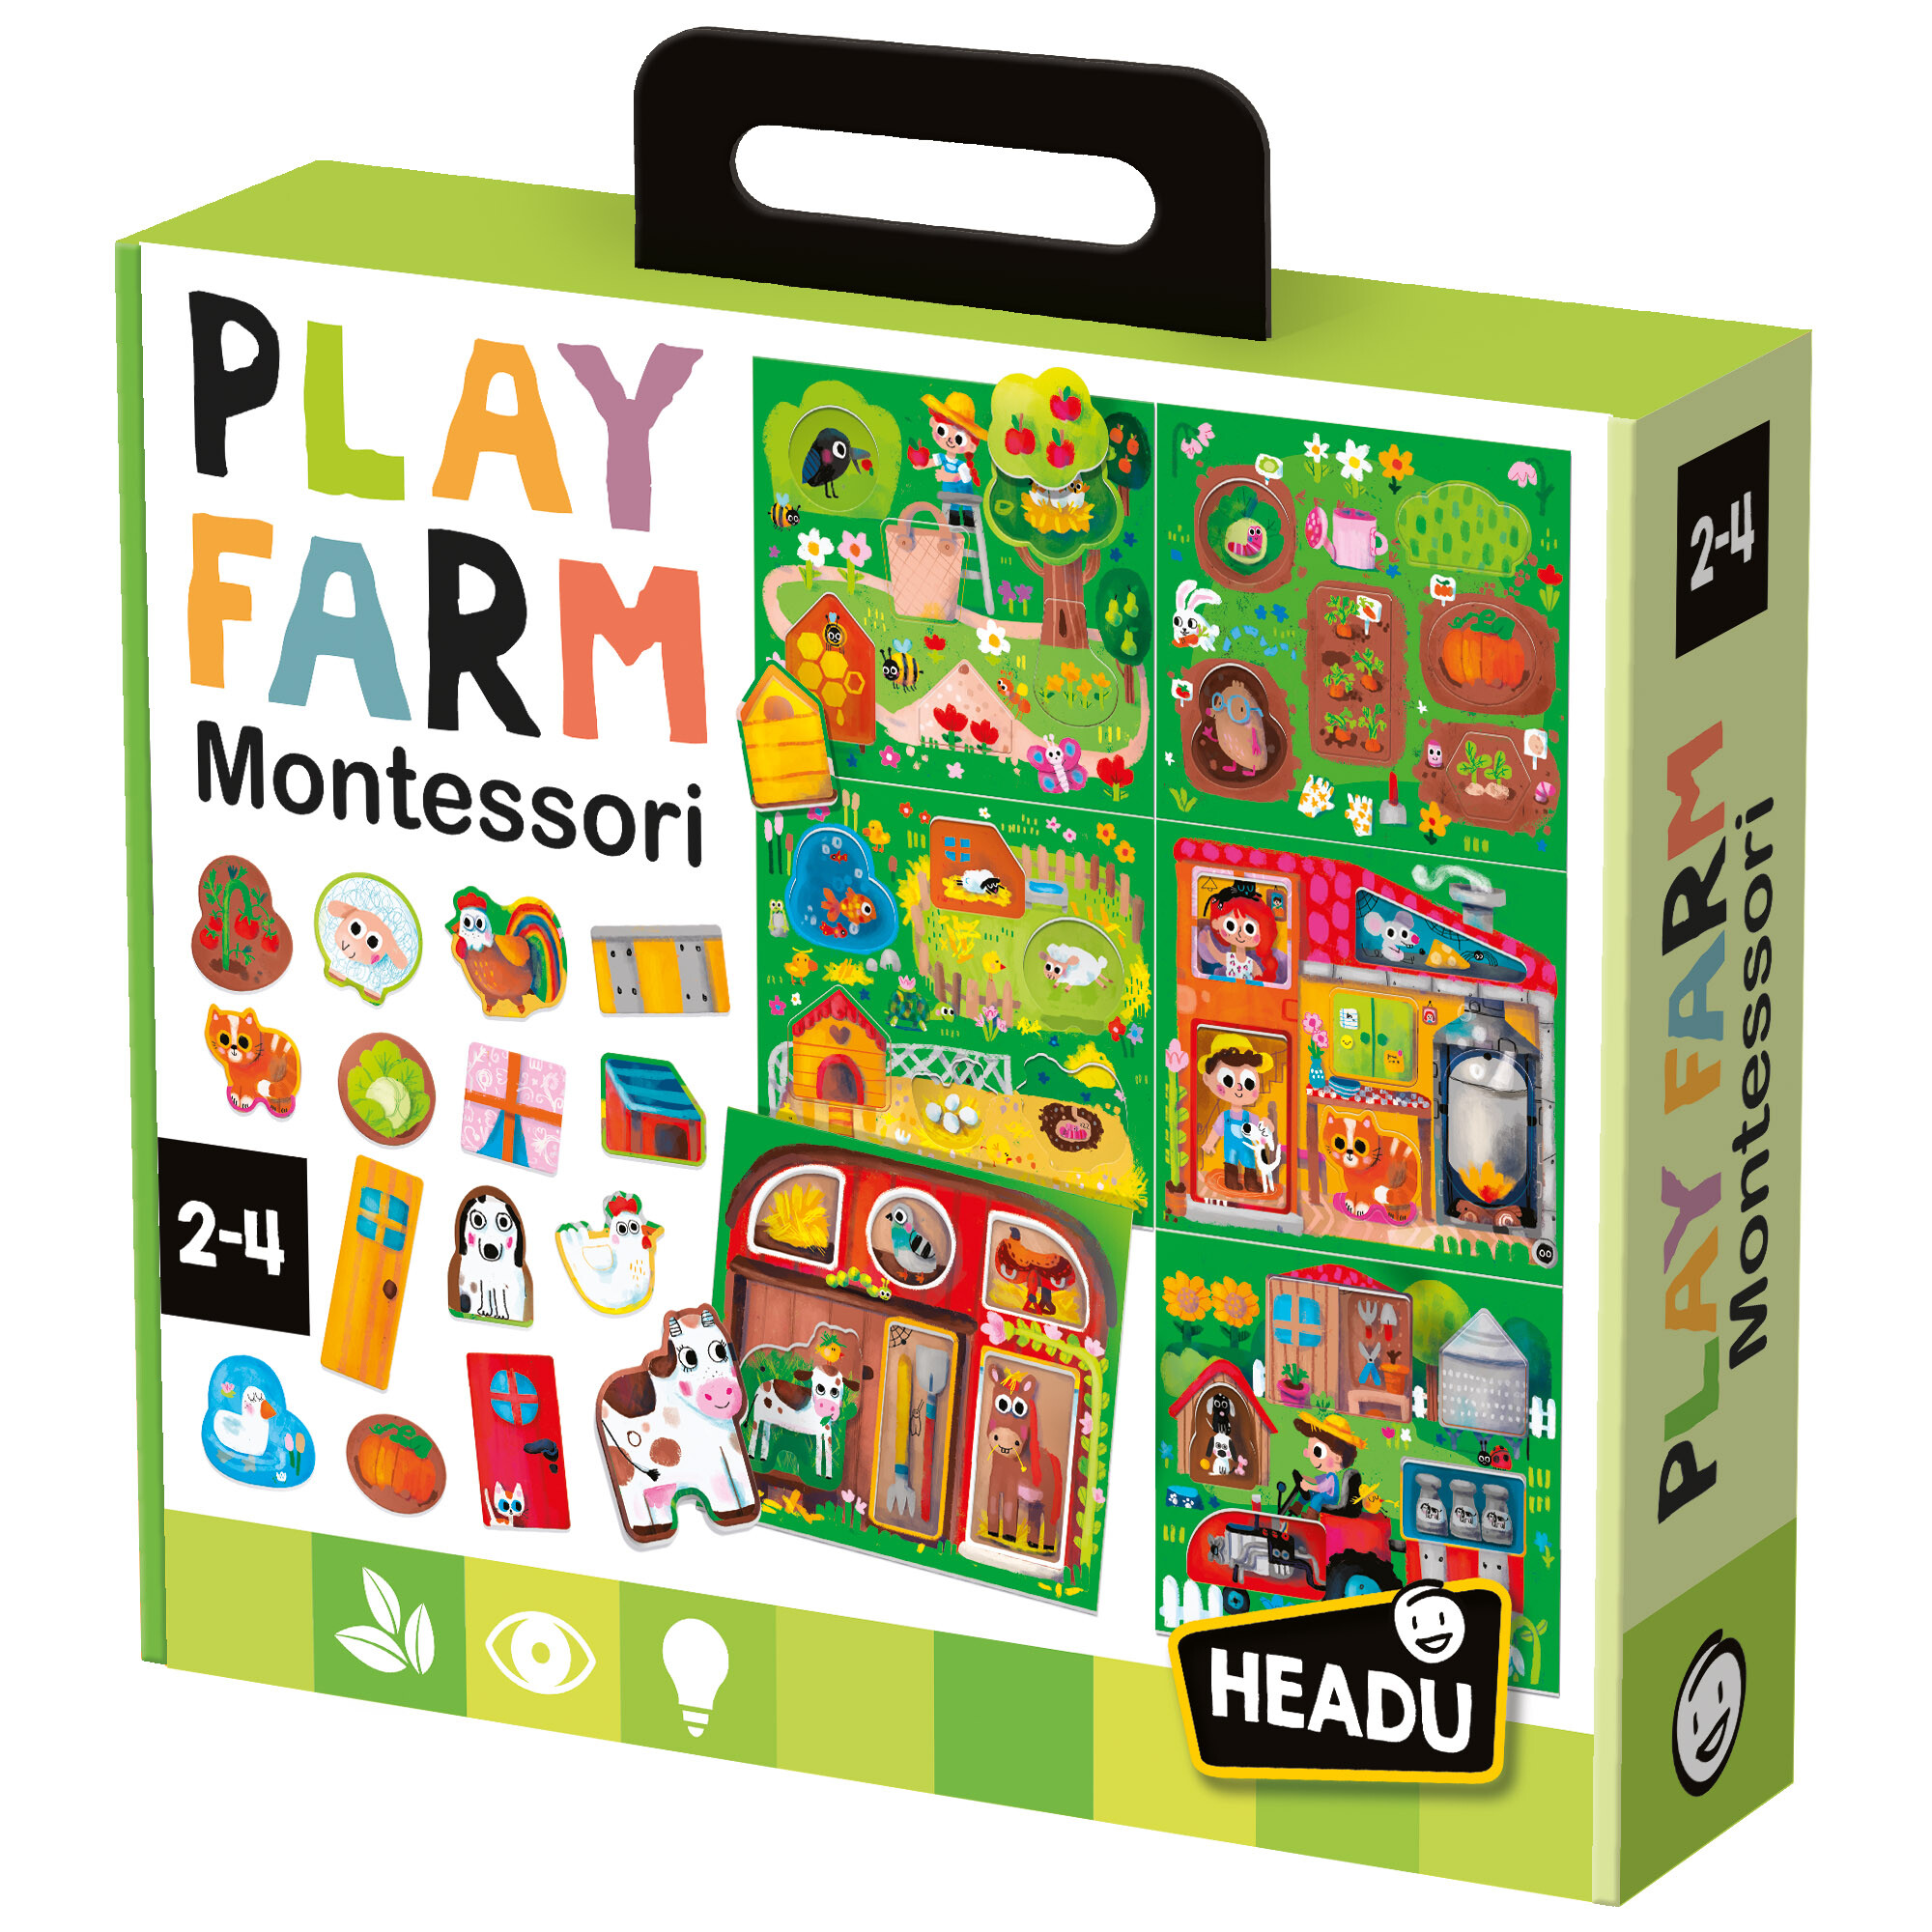 Headu - headu baby play farm montessori - HEADU